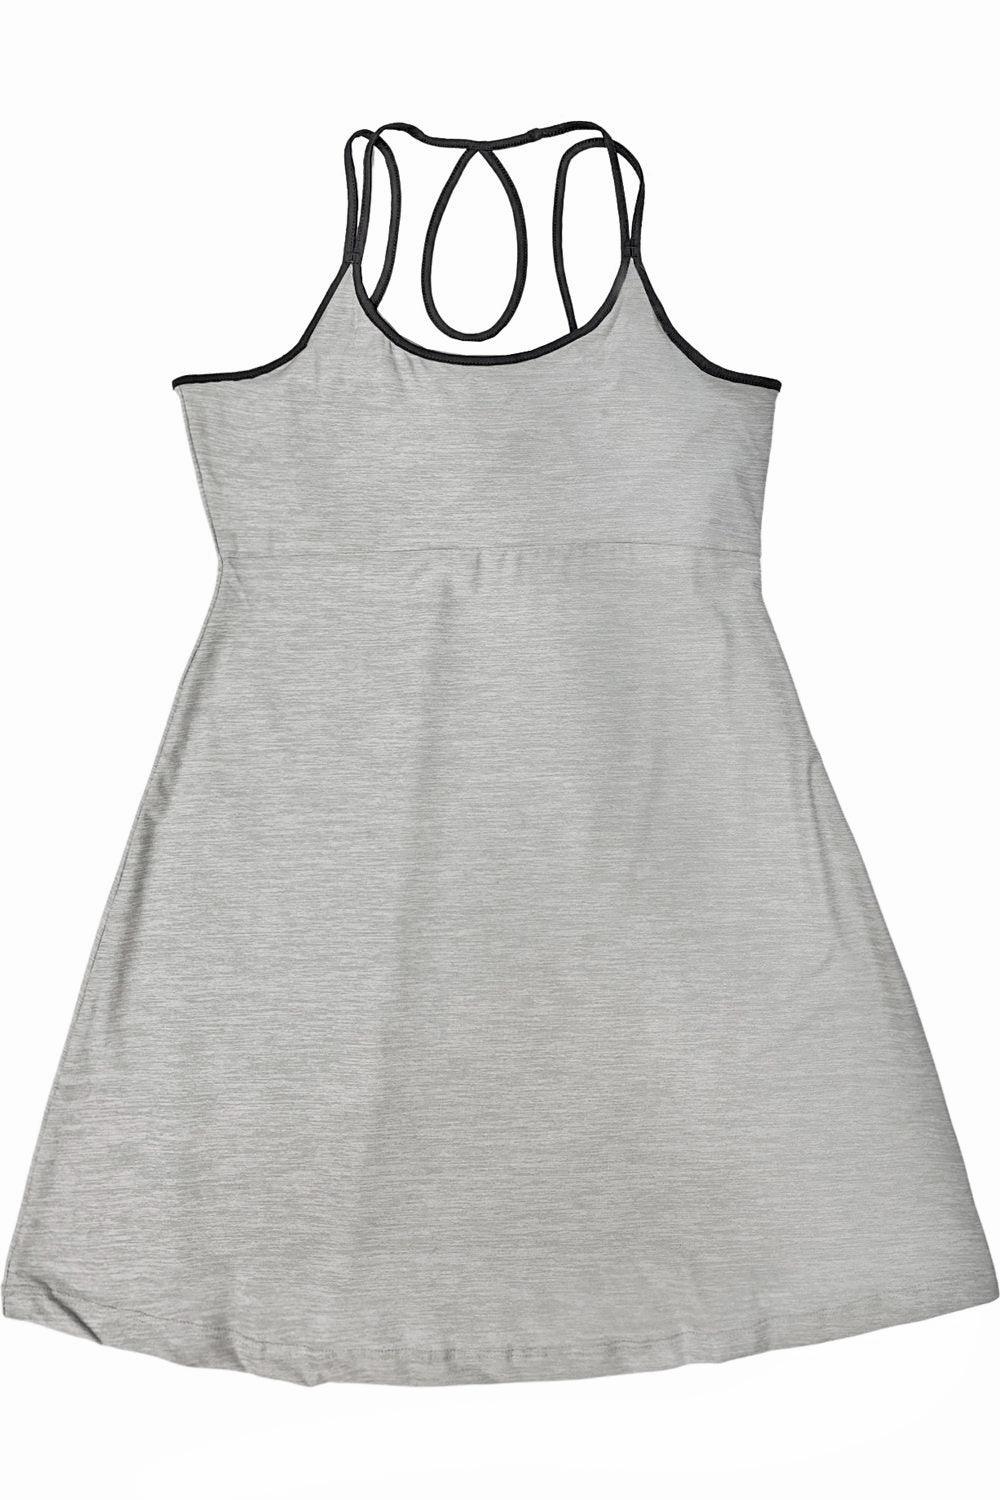 Sport dress light gray 'Apana' OUT10000092 - yesUndress